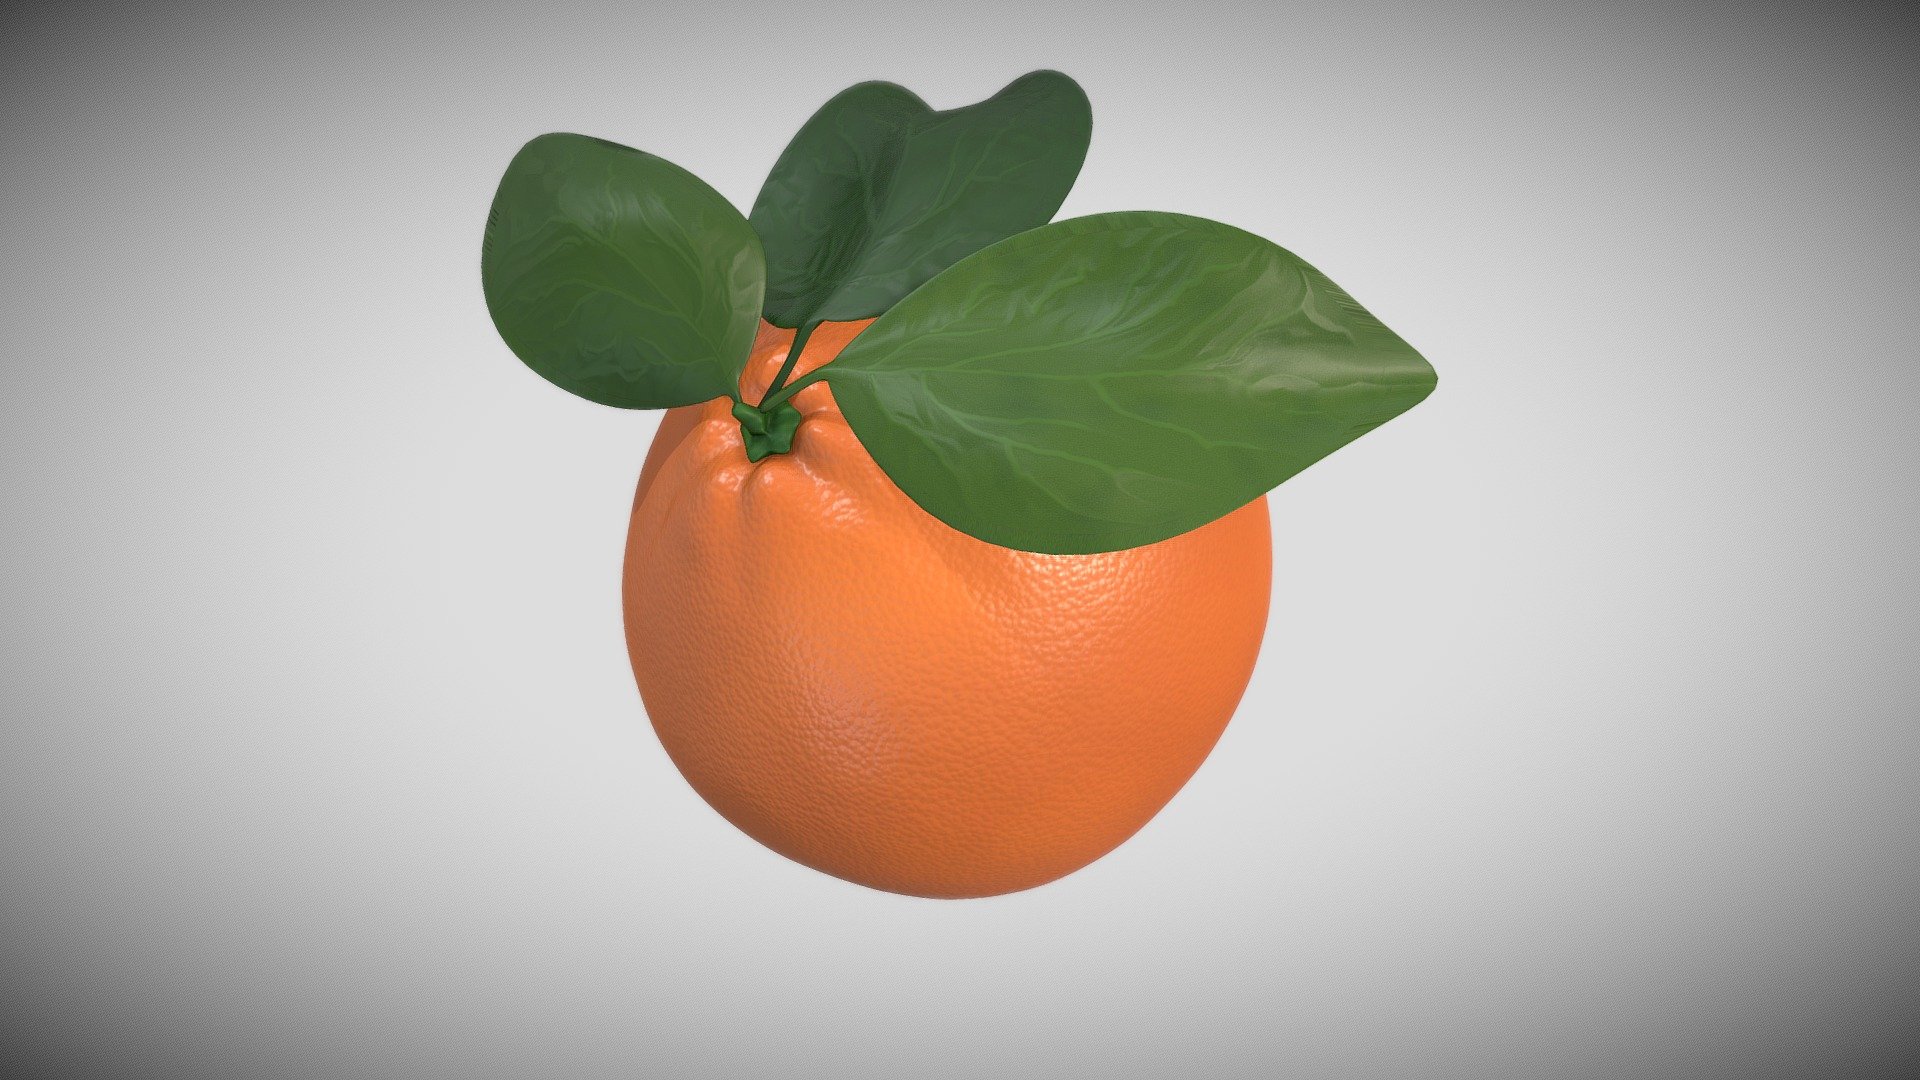 Made with Blender for Sketchfab Weekly Challenge - #4 Food - Orange with leafs - Download Free 3D model by vanya (@3dvanya) 3d model